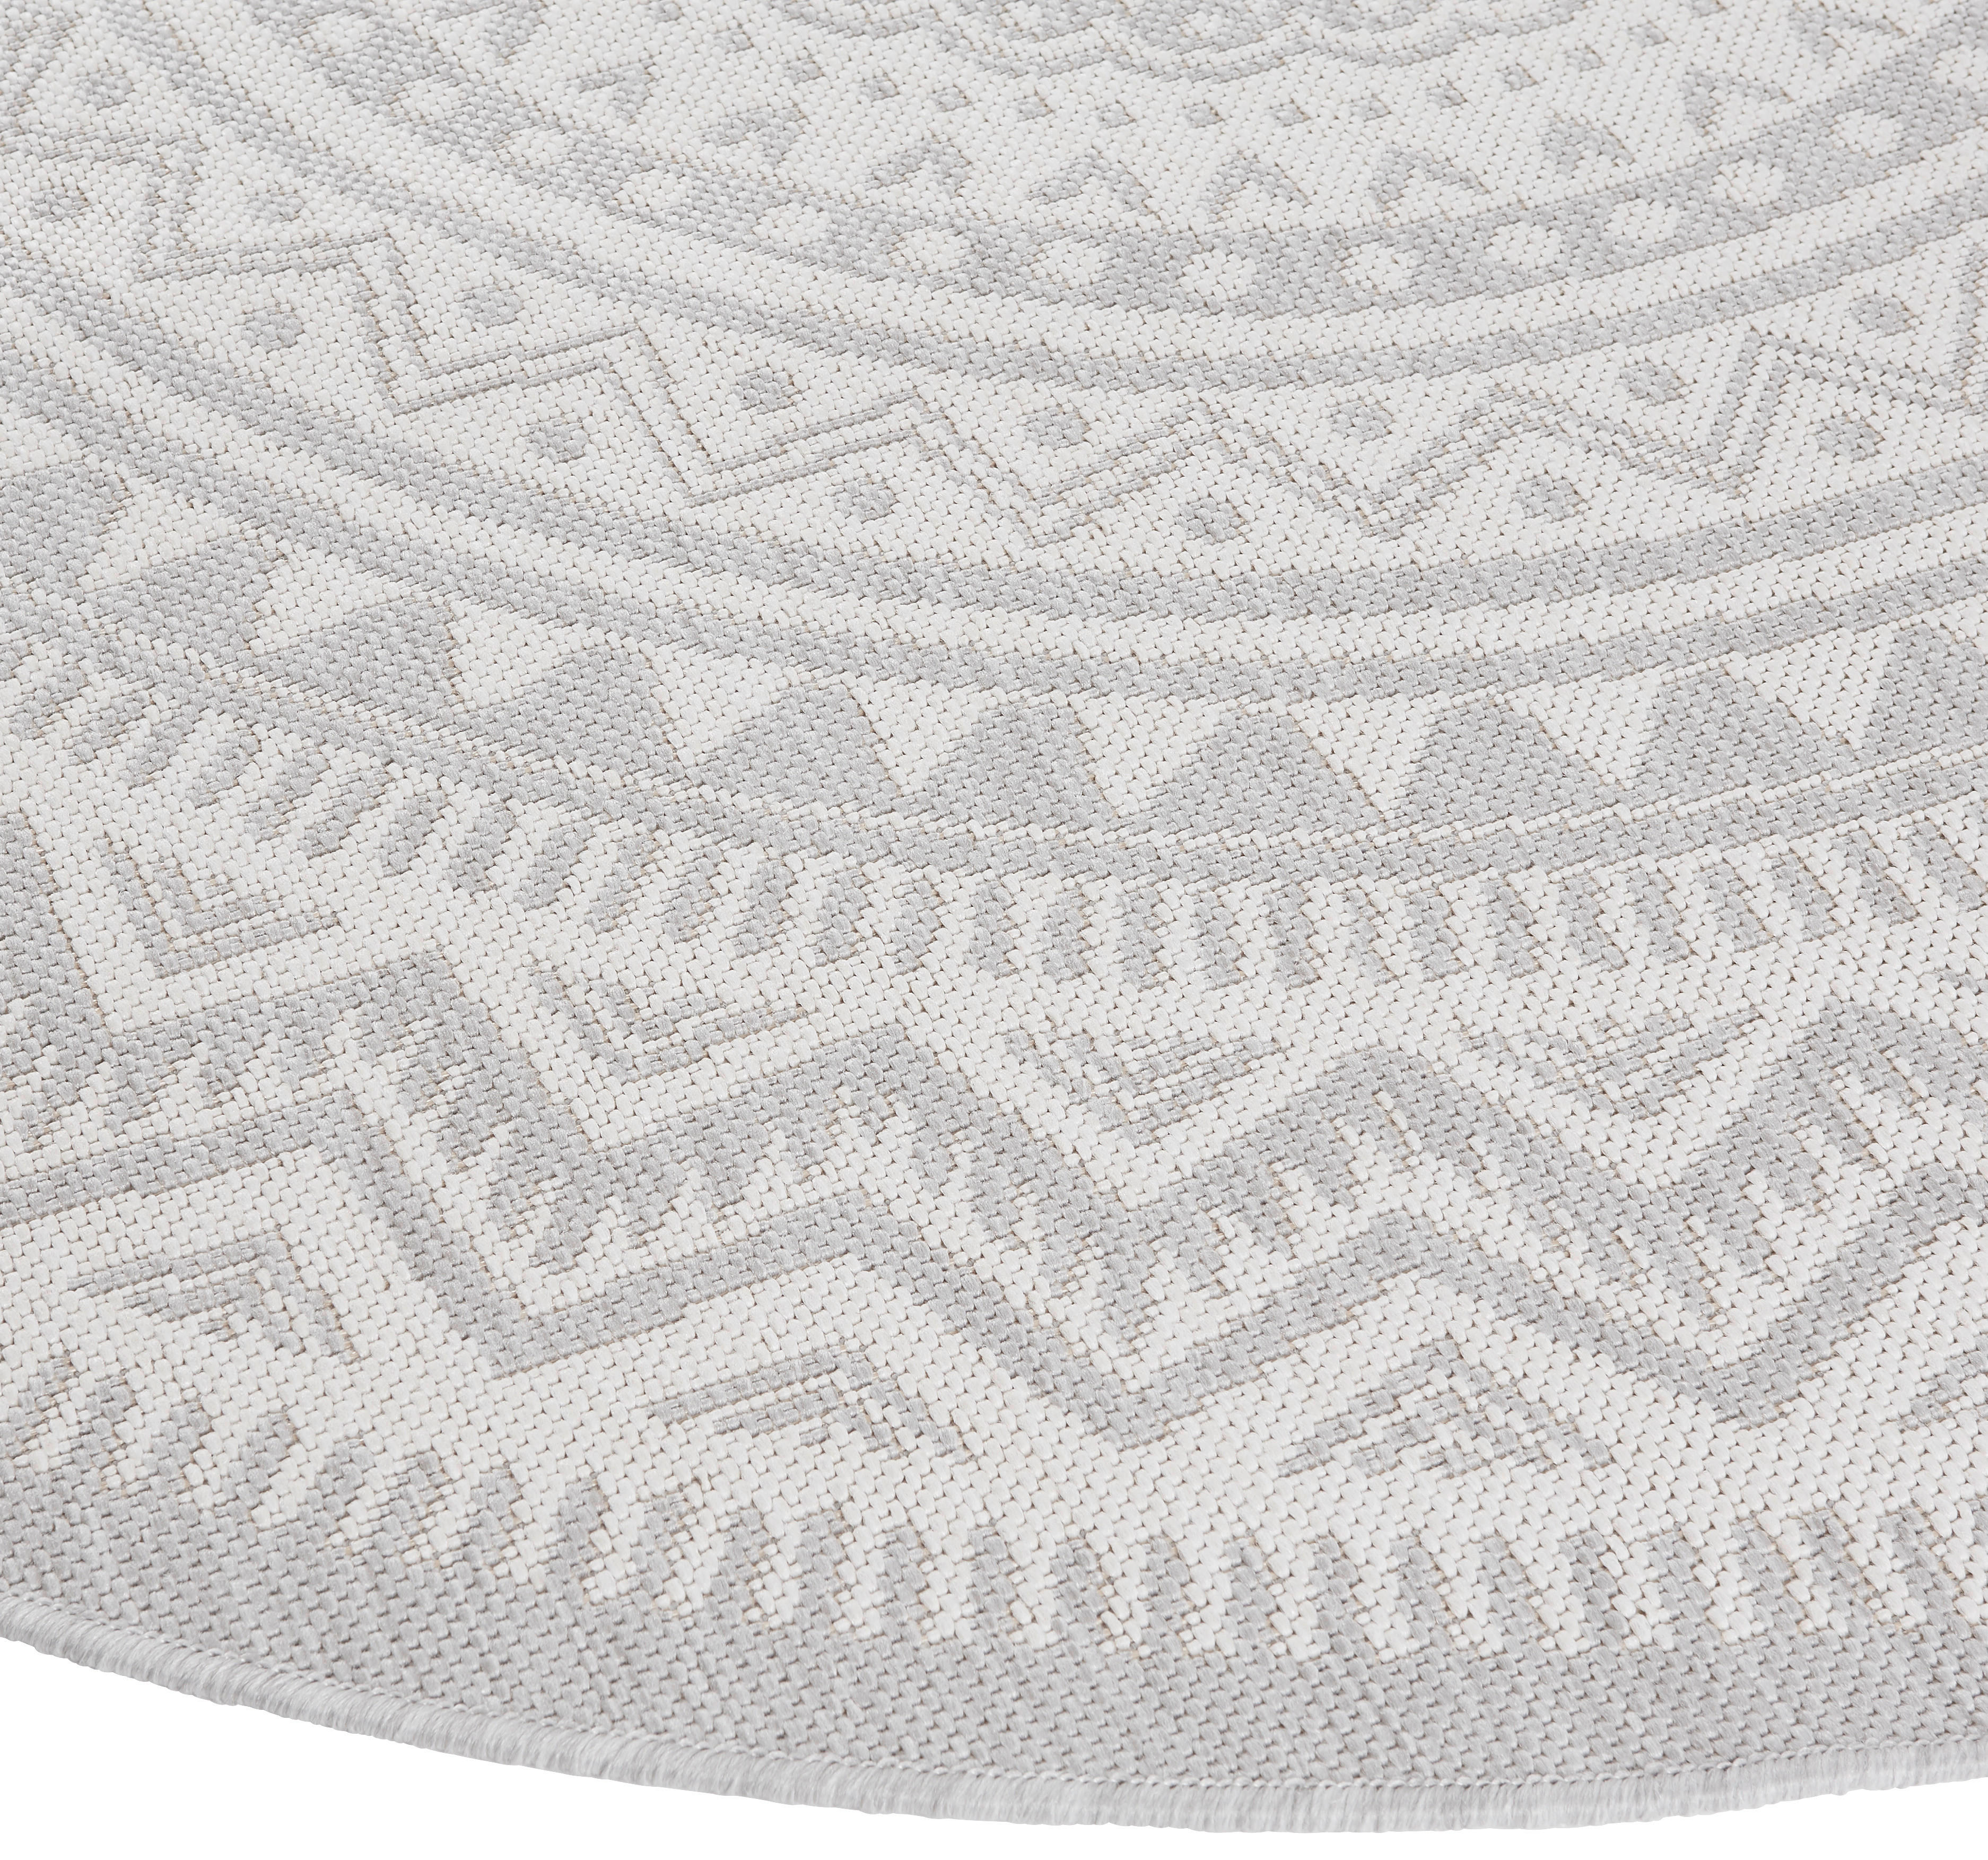 UTOMHUSMATTA Visby  - vit/silver, Design, textil (120cm) - Novel